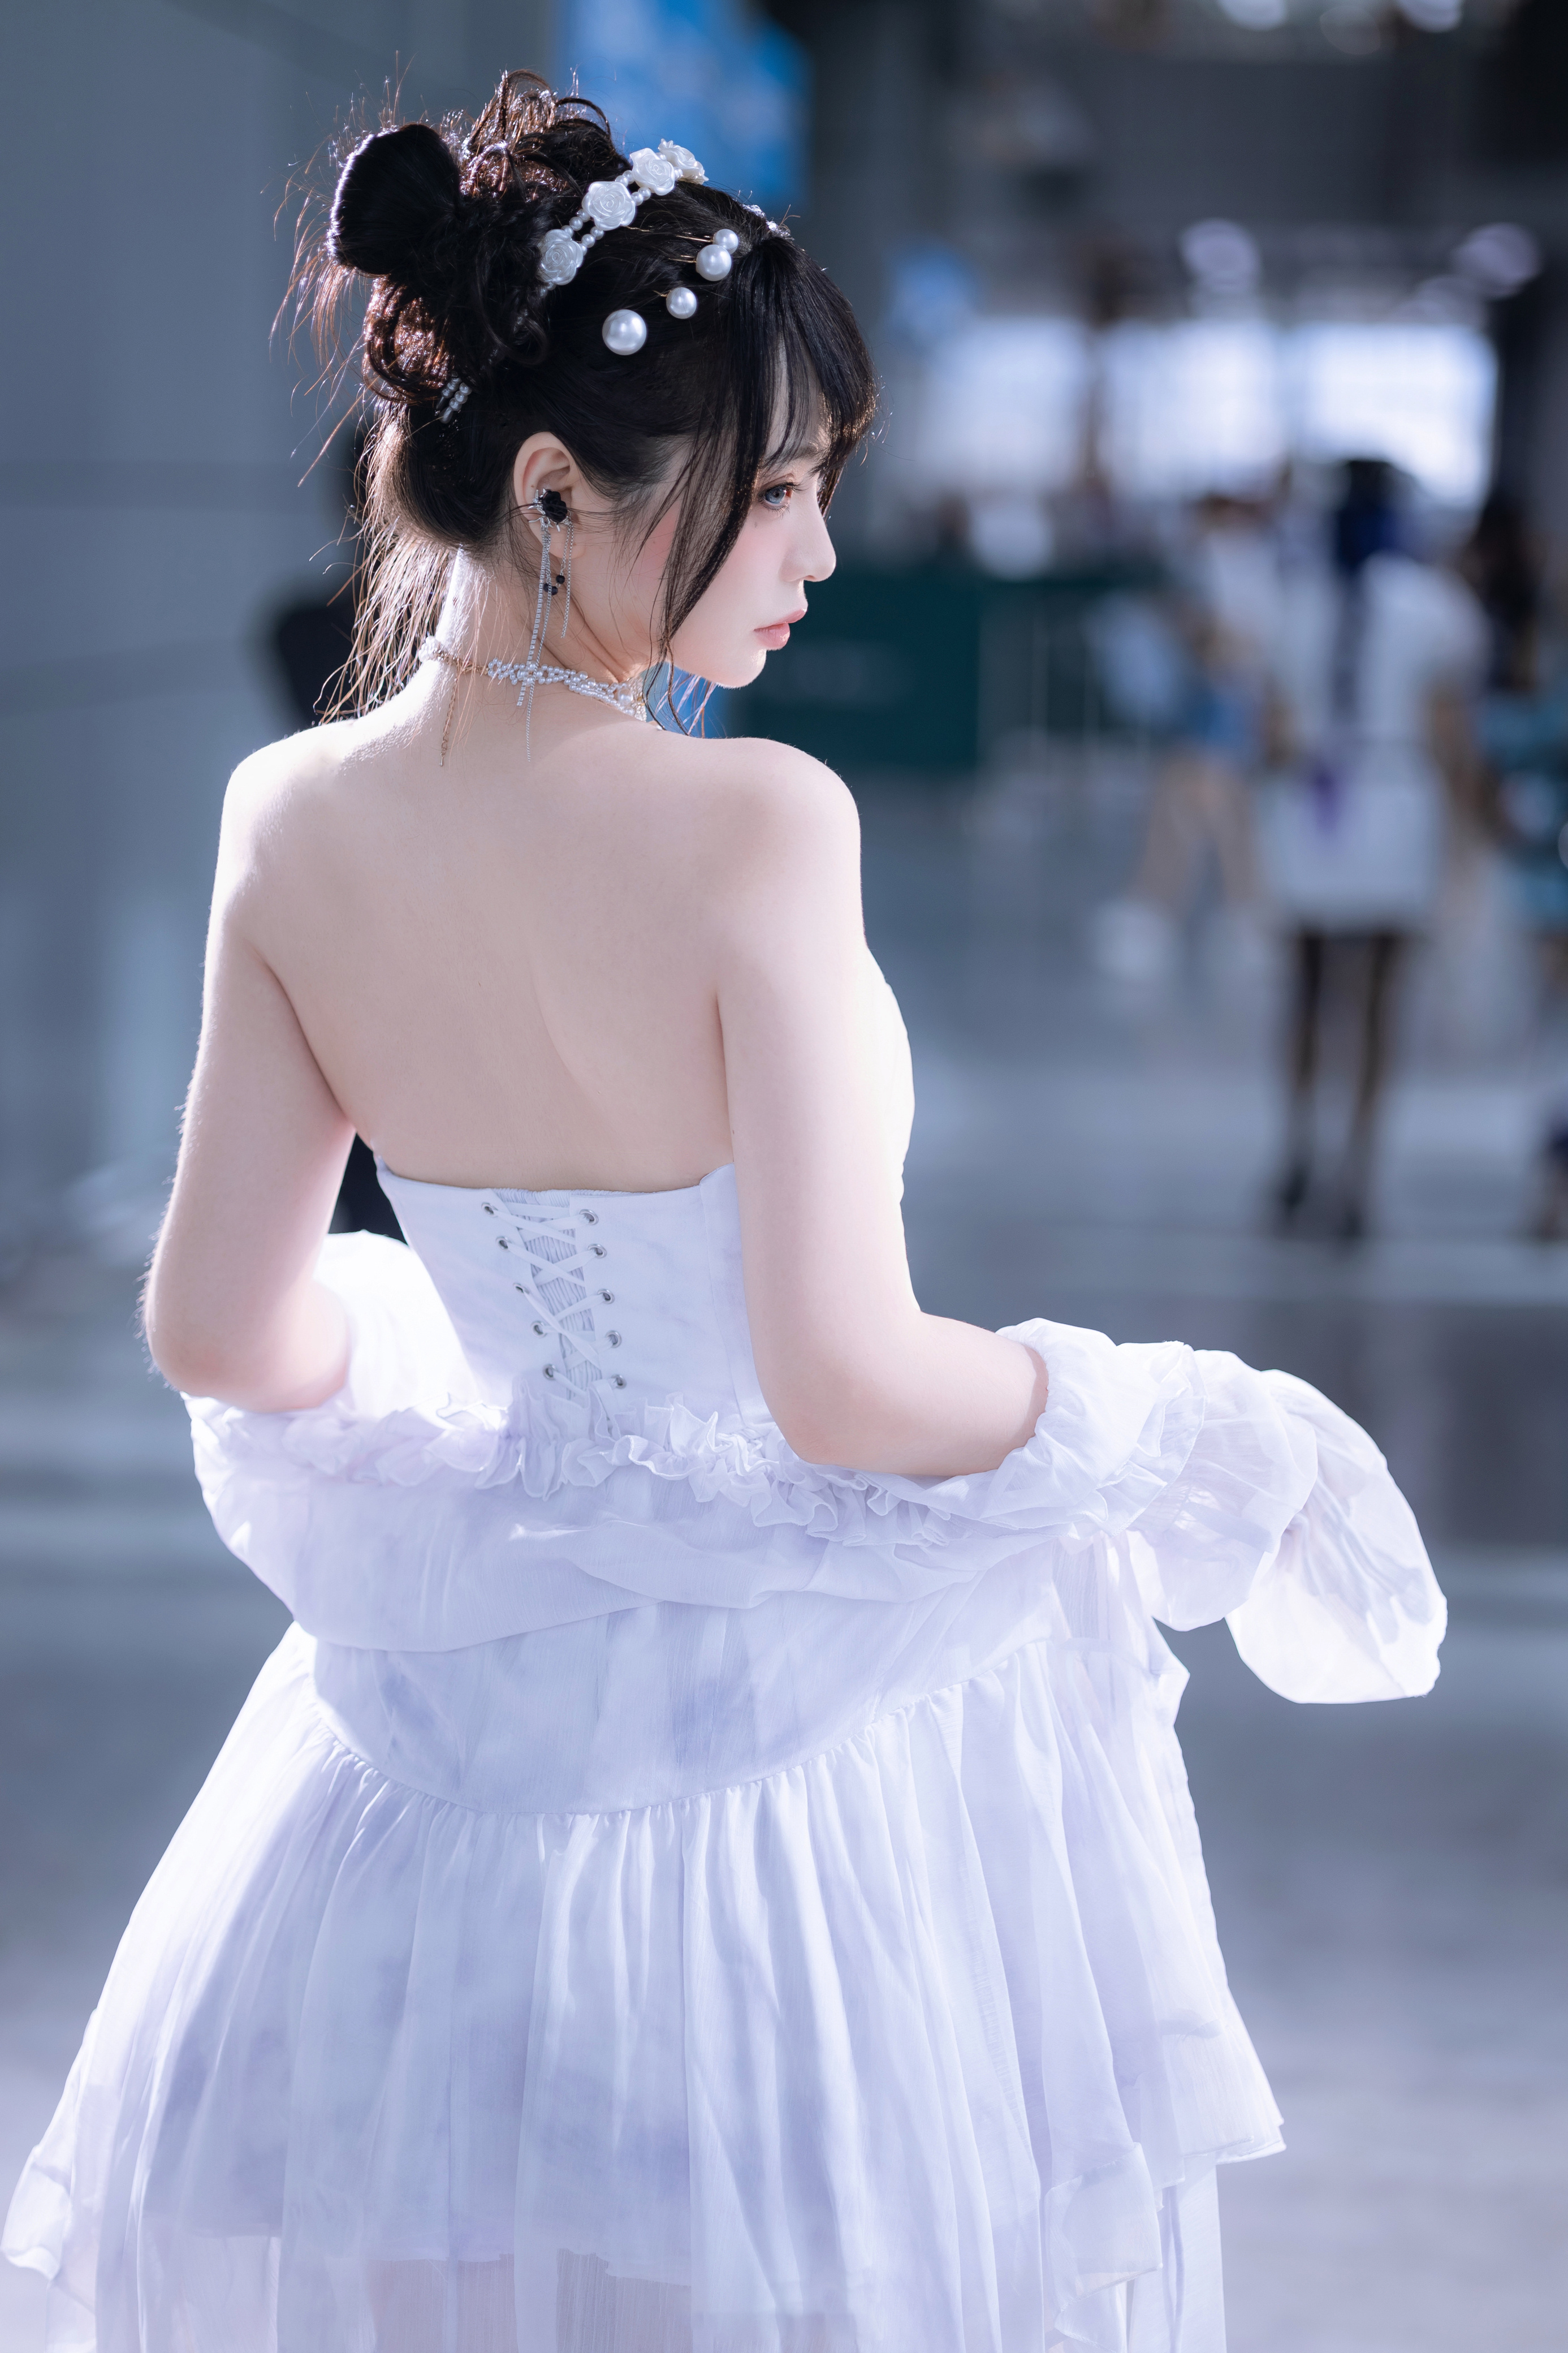 People 2773x4160 Asian women white dress dress blurry background